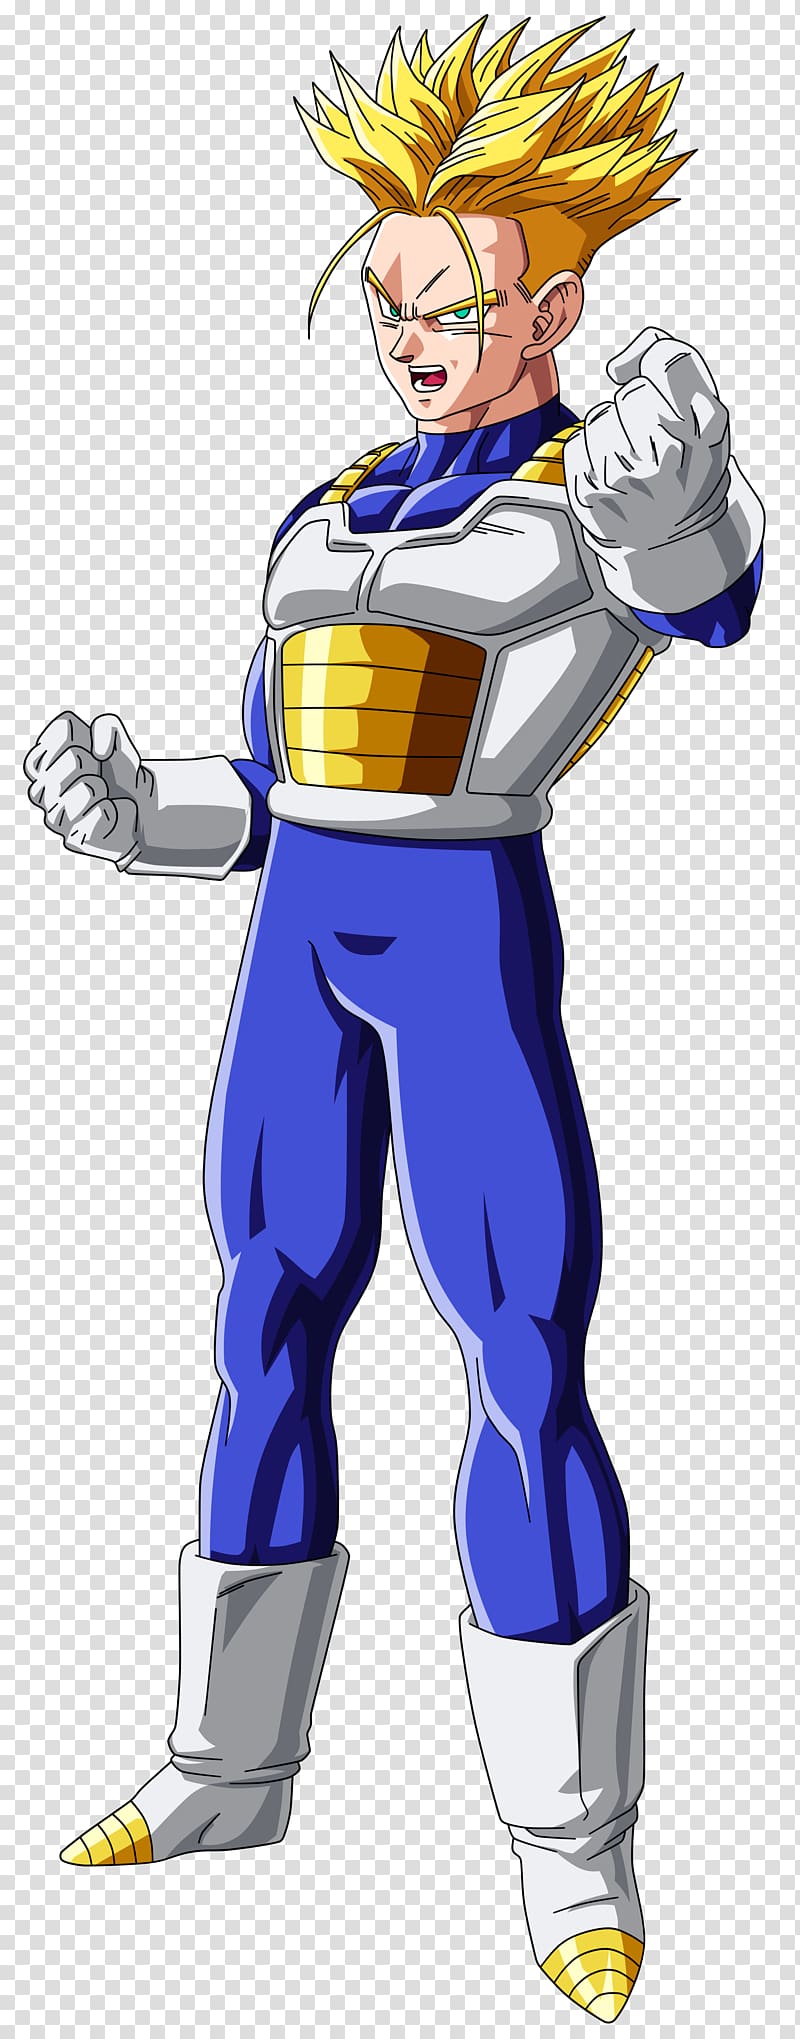 Trunks Goku Frieza Vegeta Gohan, Blue Trunk transparent background PNG clipart